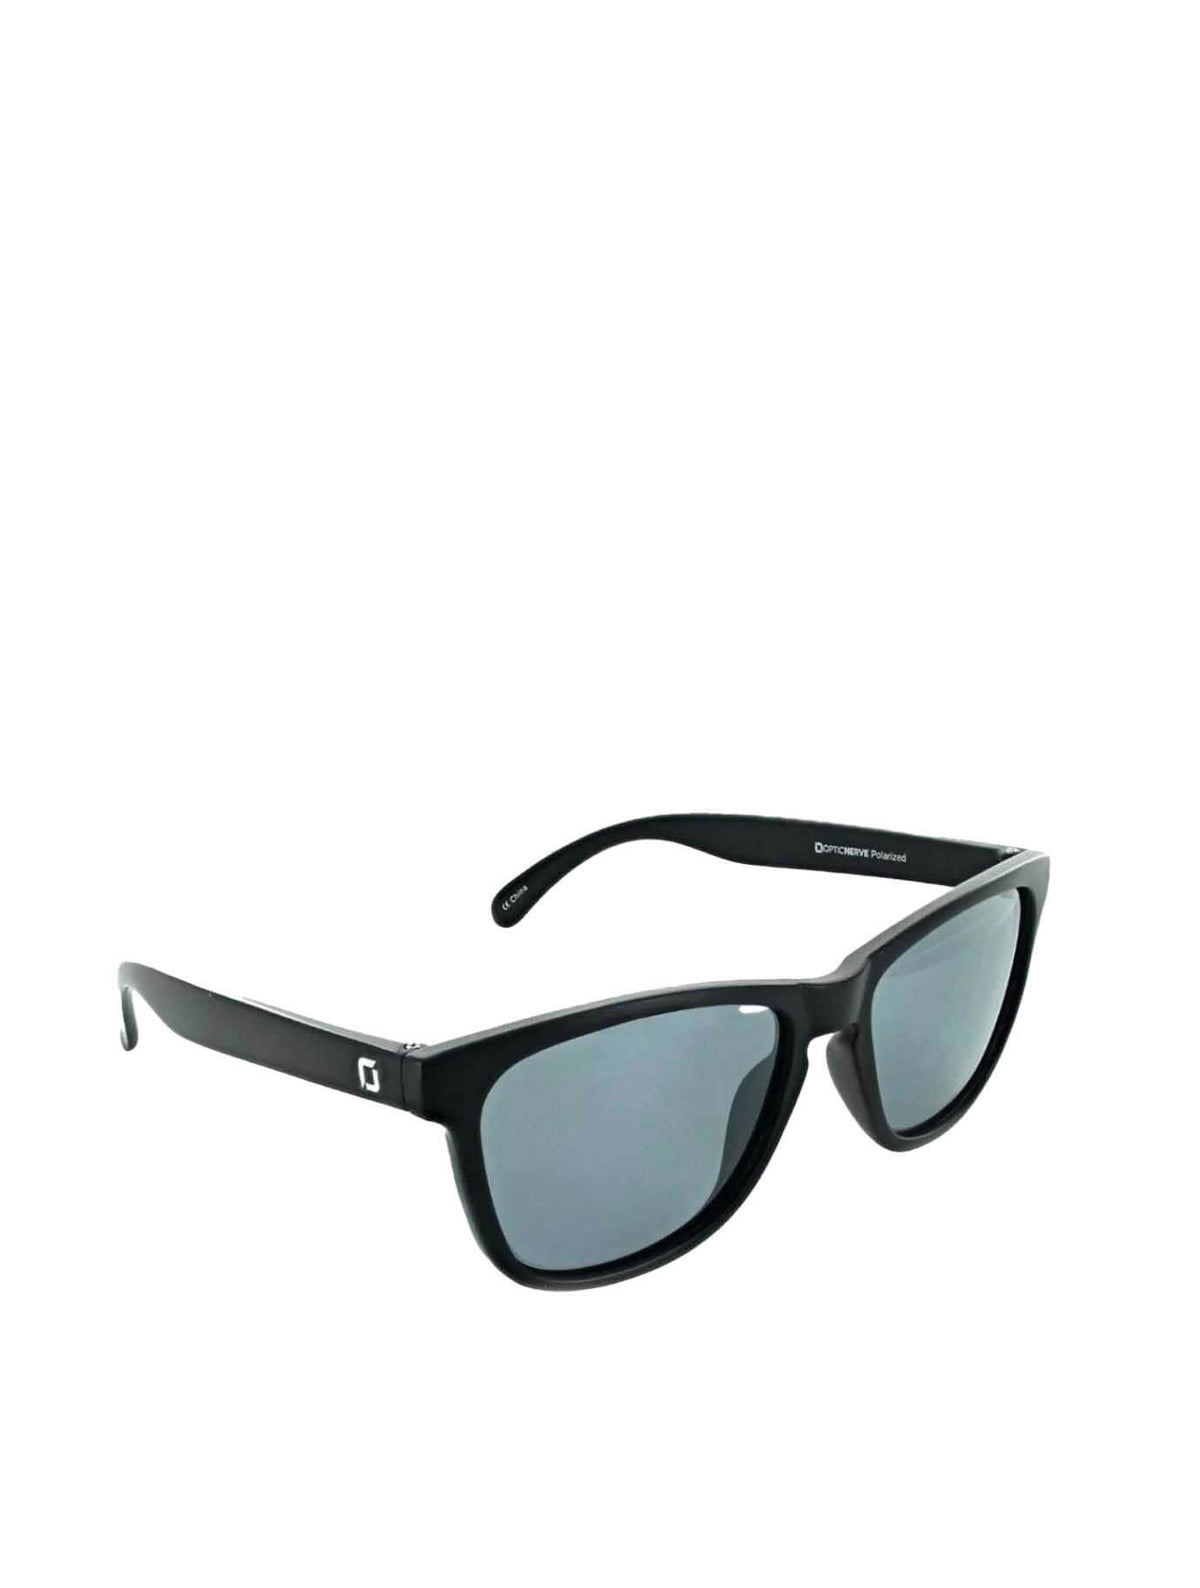 Fairplay Sunglasses in Matte Black/Smoke Lens/Silver Mirror